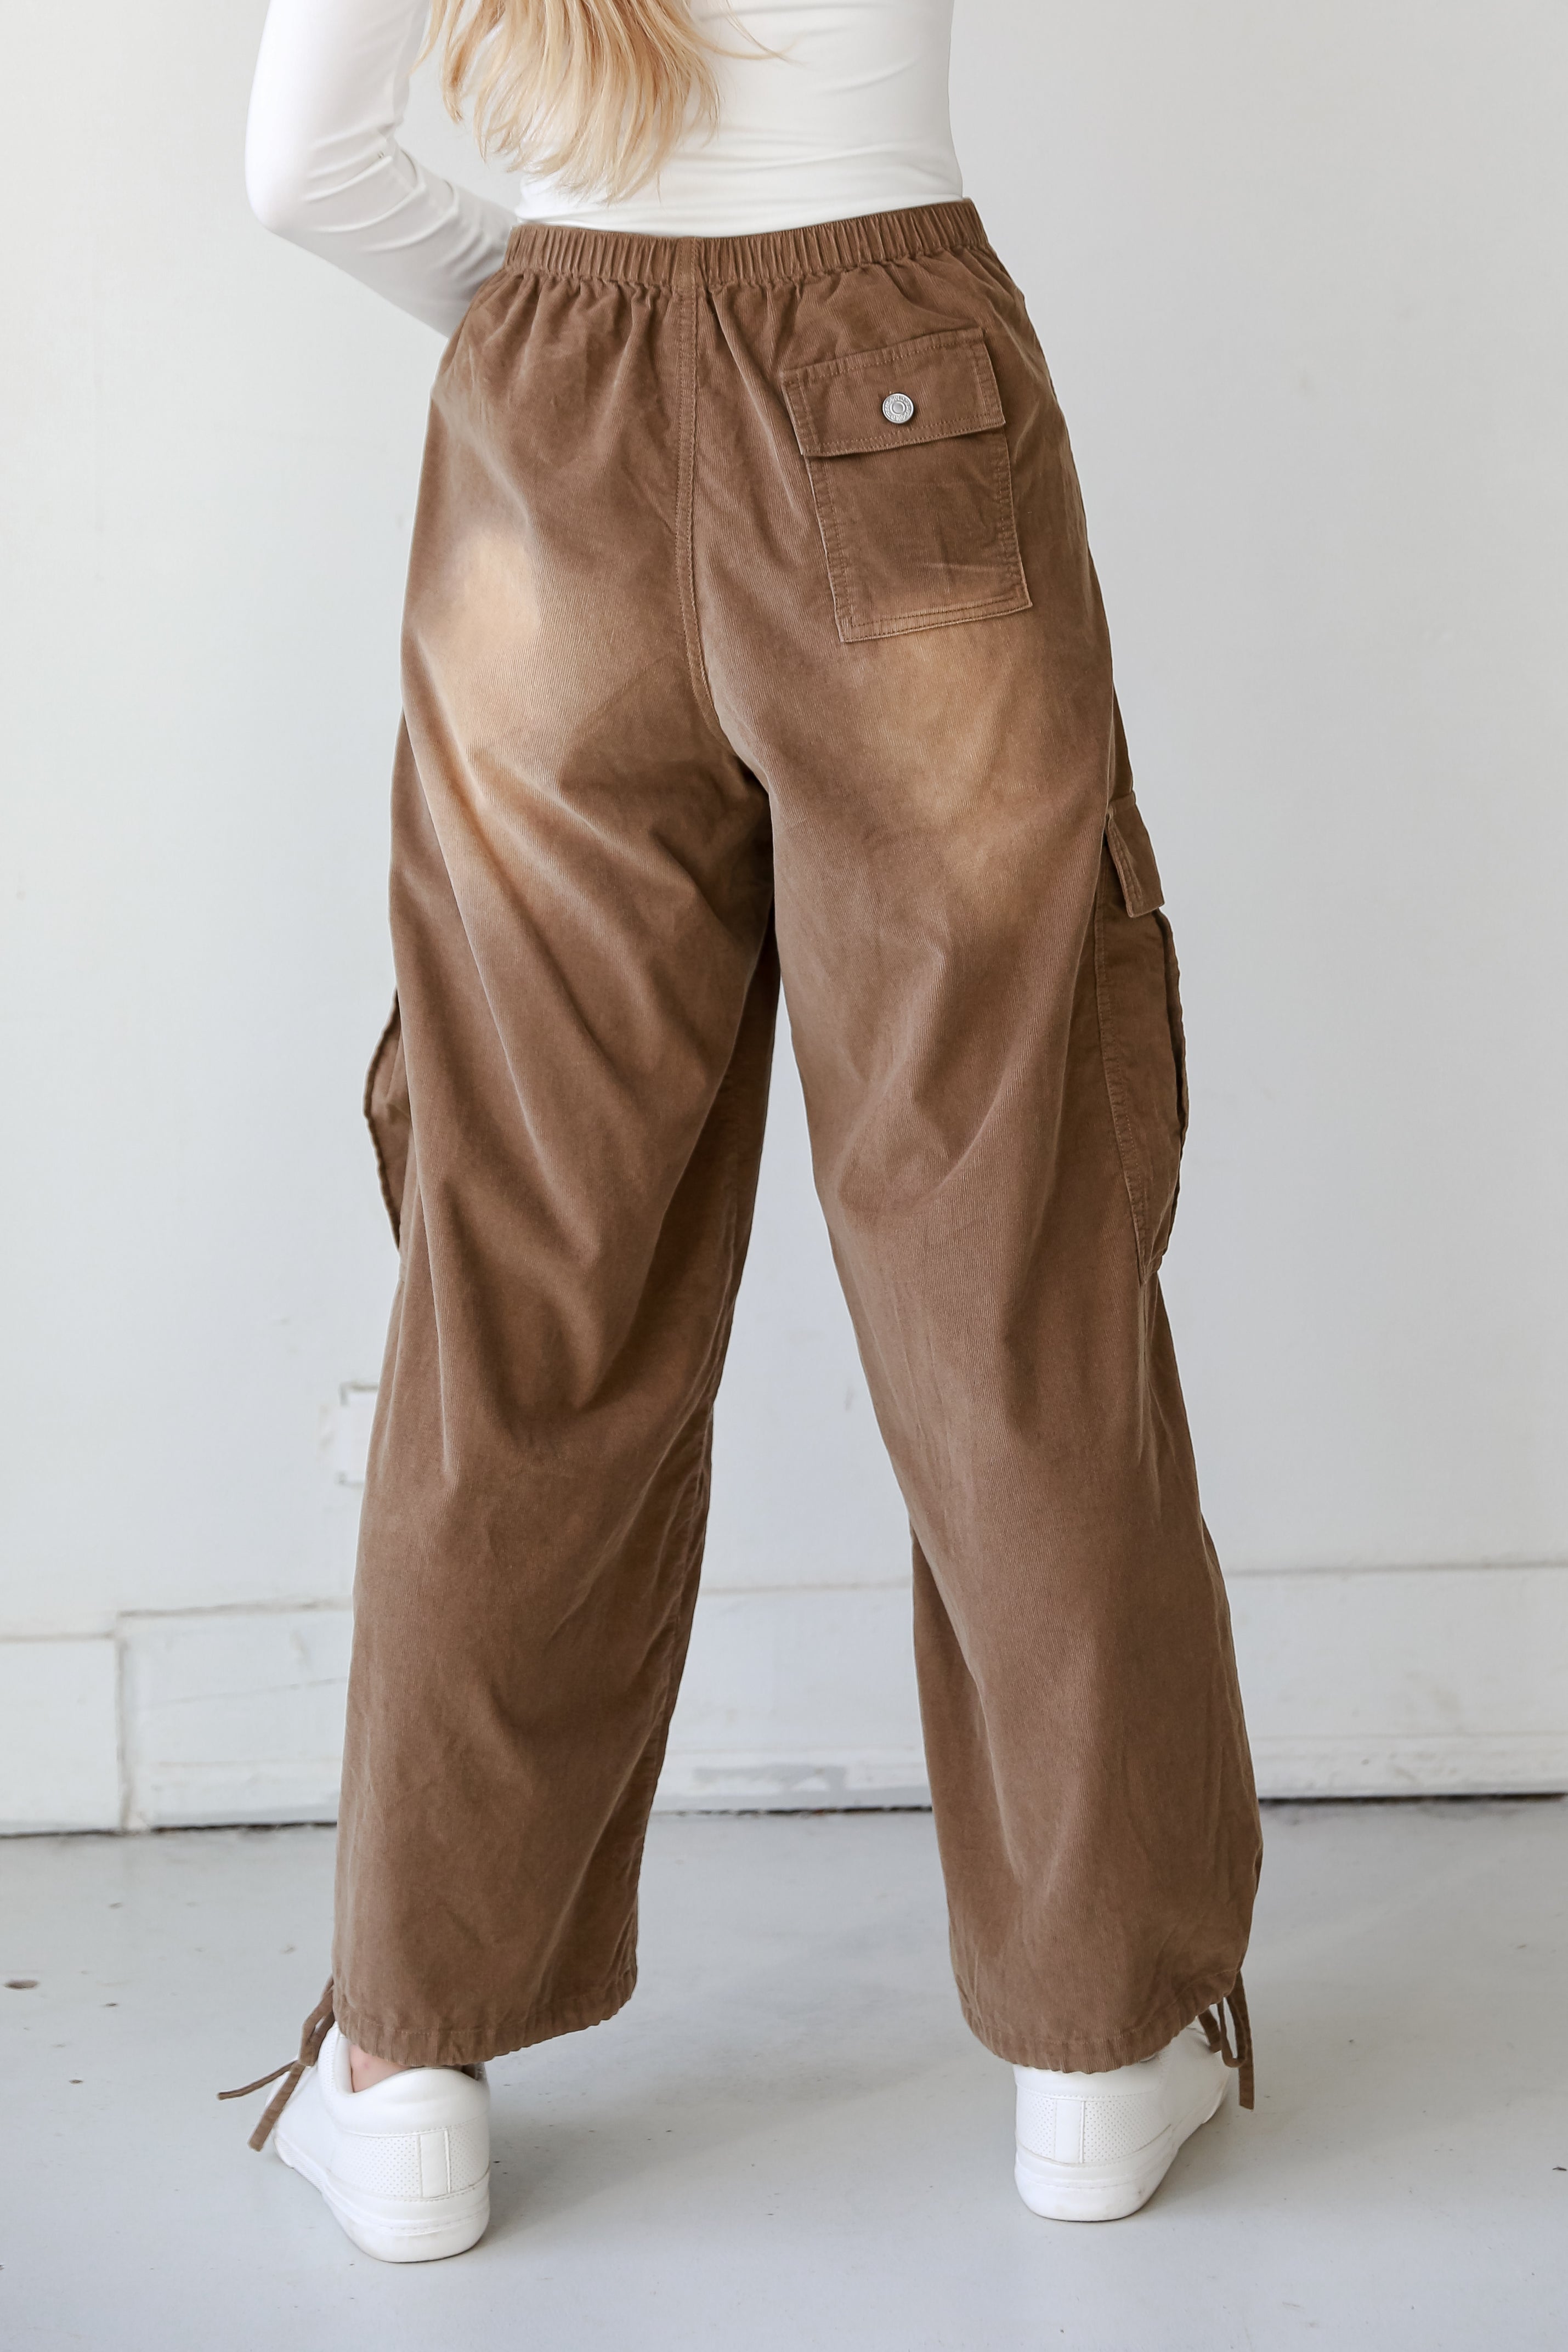 FINAL SALE - Contemporary Aura Brown Corduroy Cargo Pants